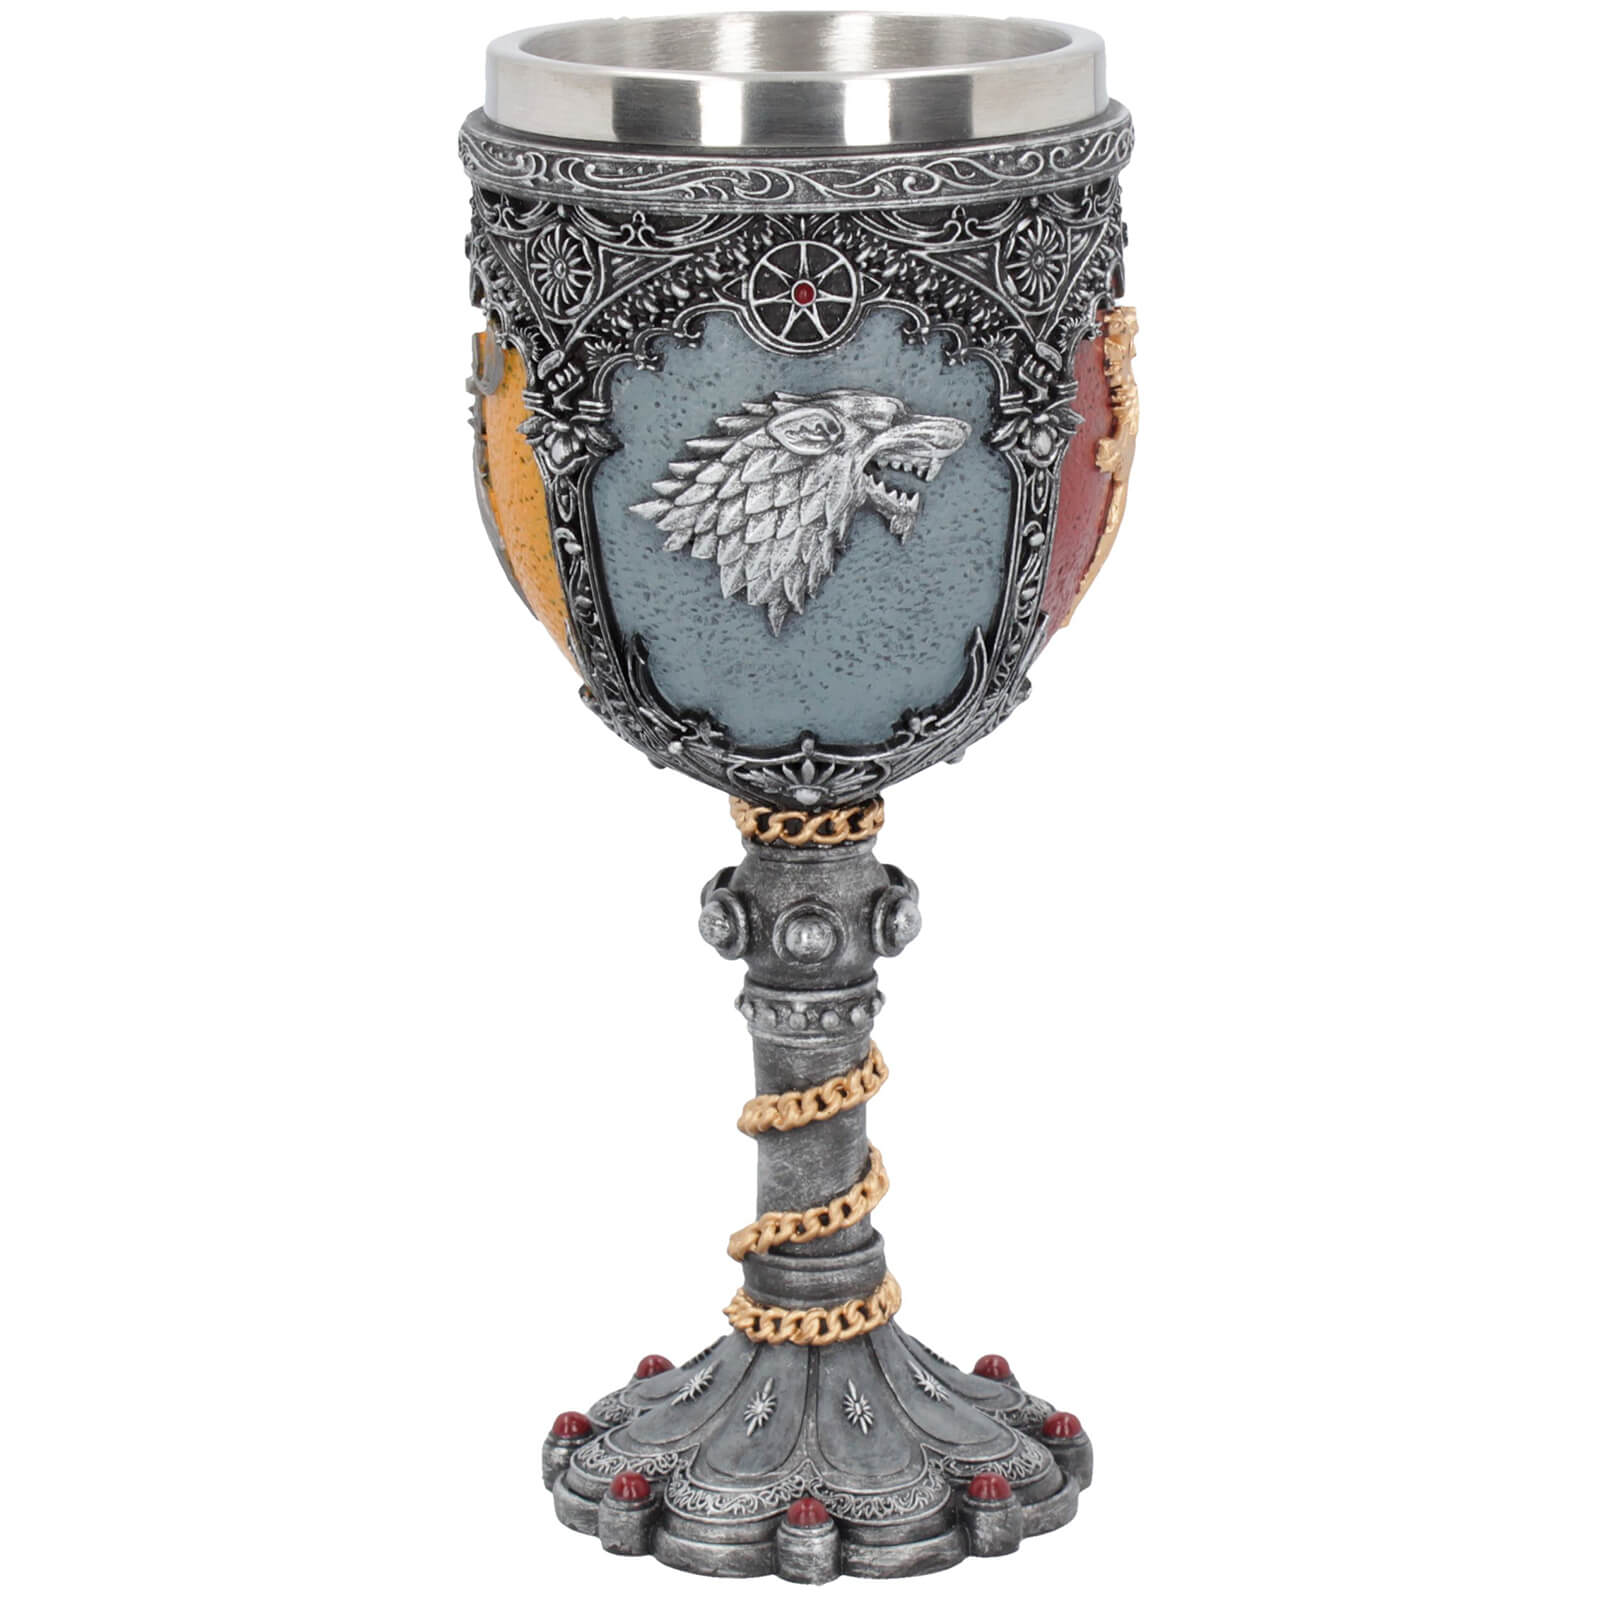 Game of Thrones - Sigil Goblet